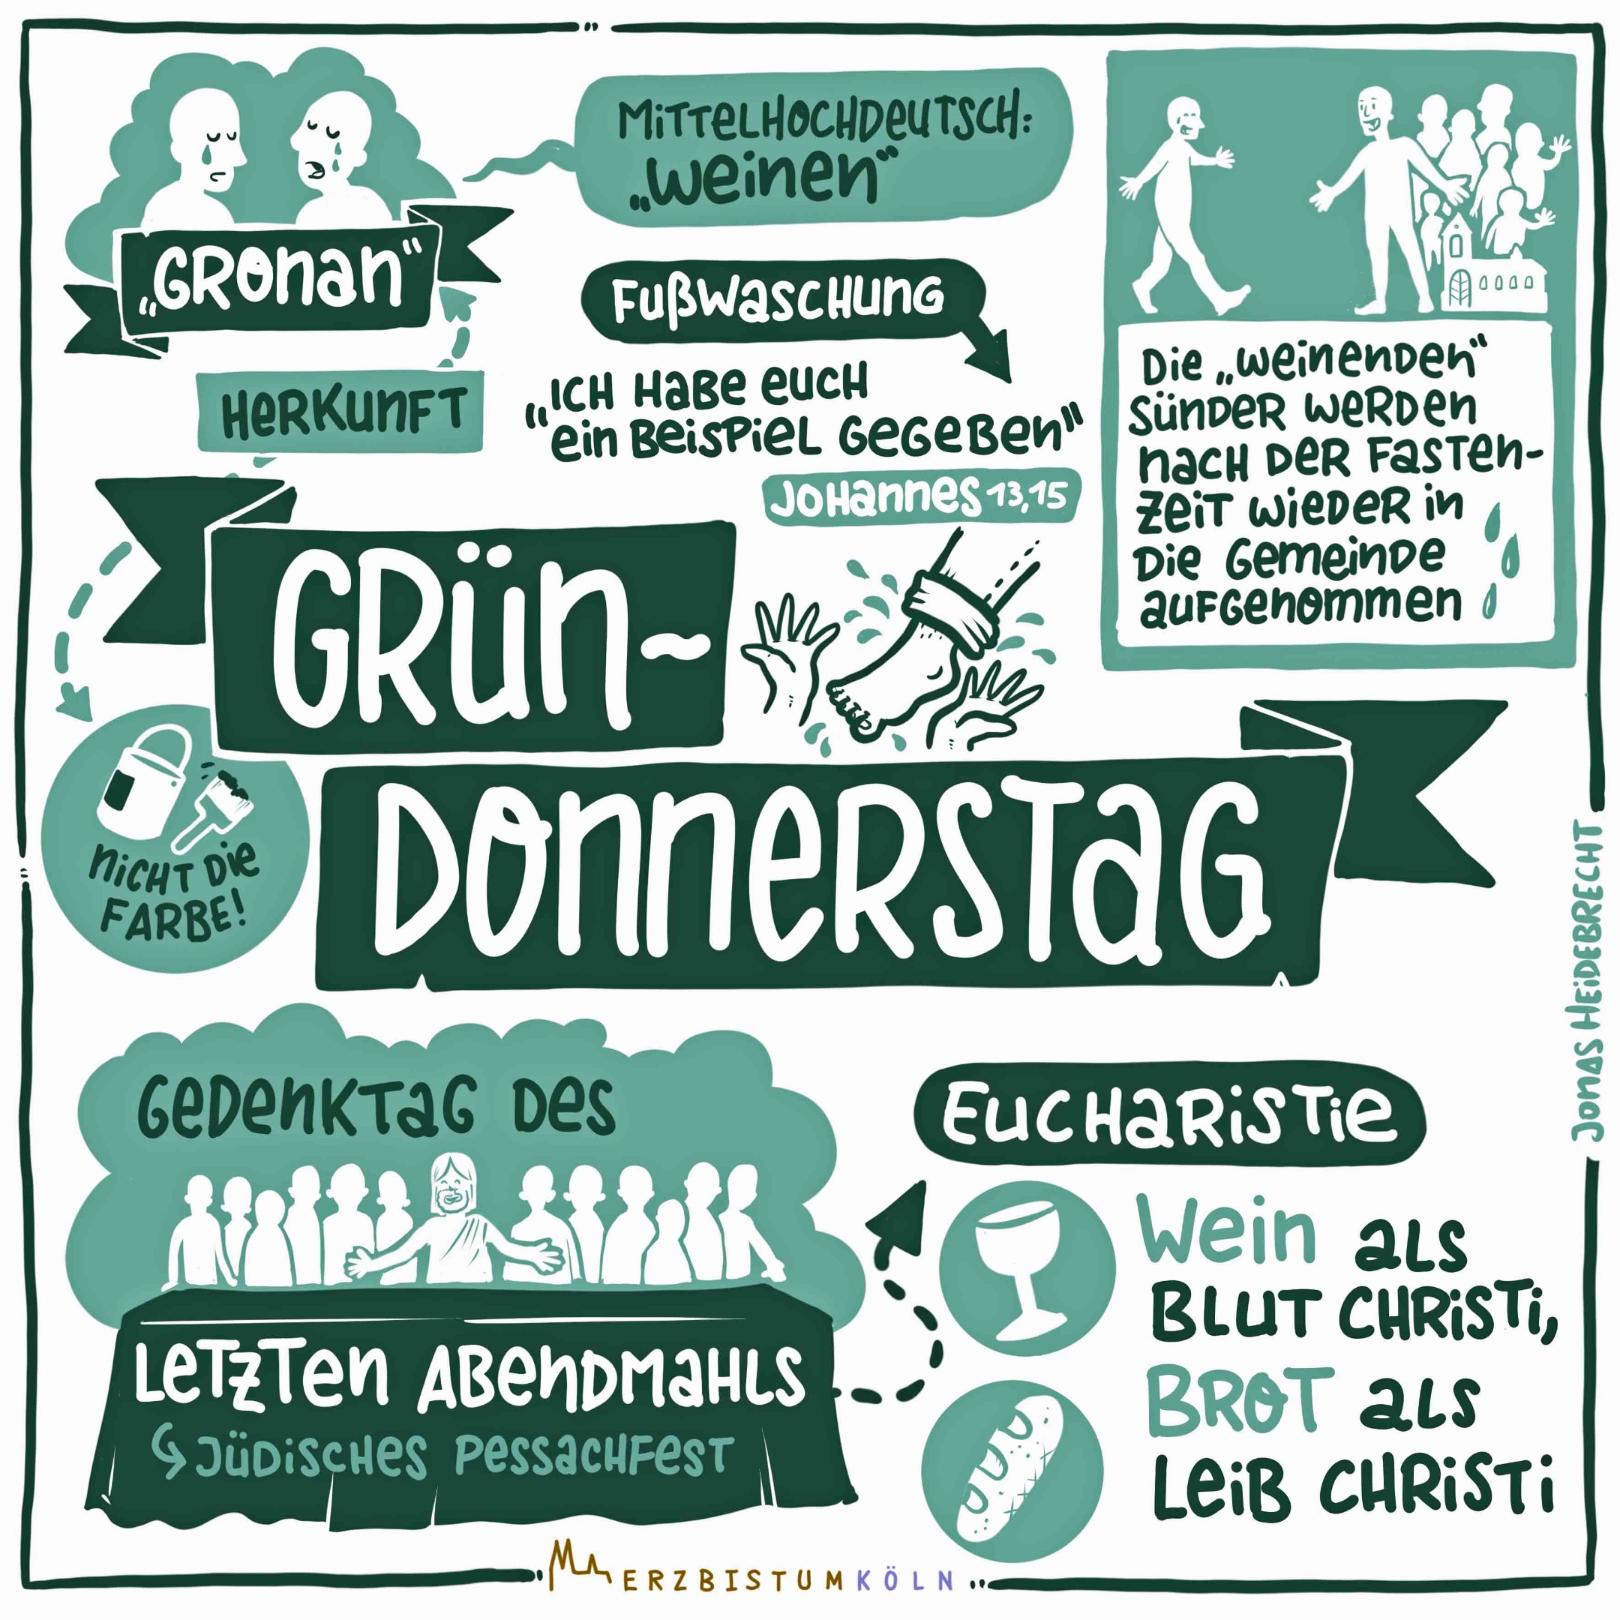 Gründonnerstag erklärt (c) Heidebrecht Frei (Erzbistum Köln) - www.pfarrbriefservice.de